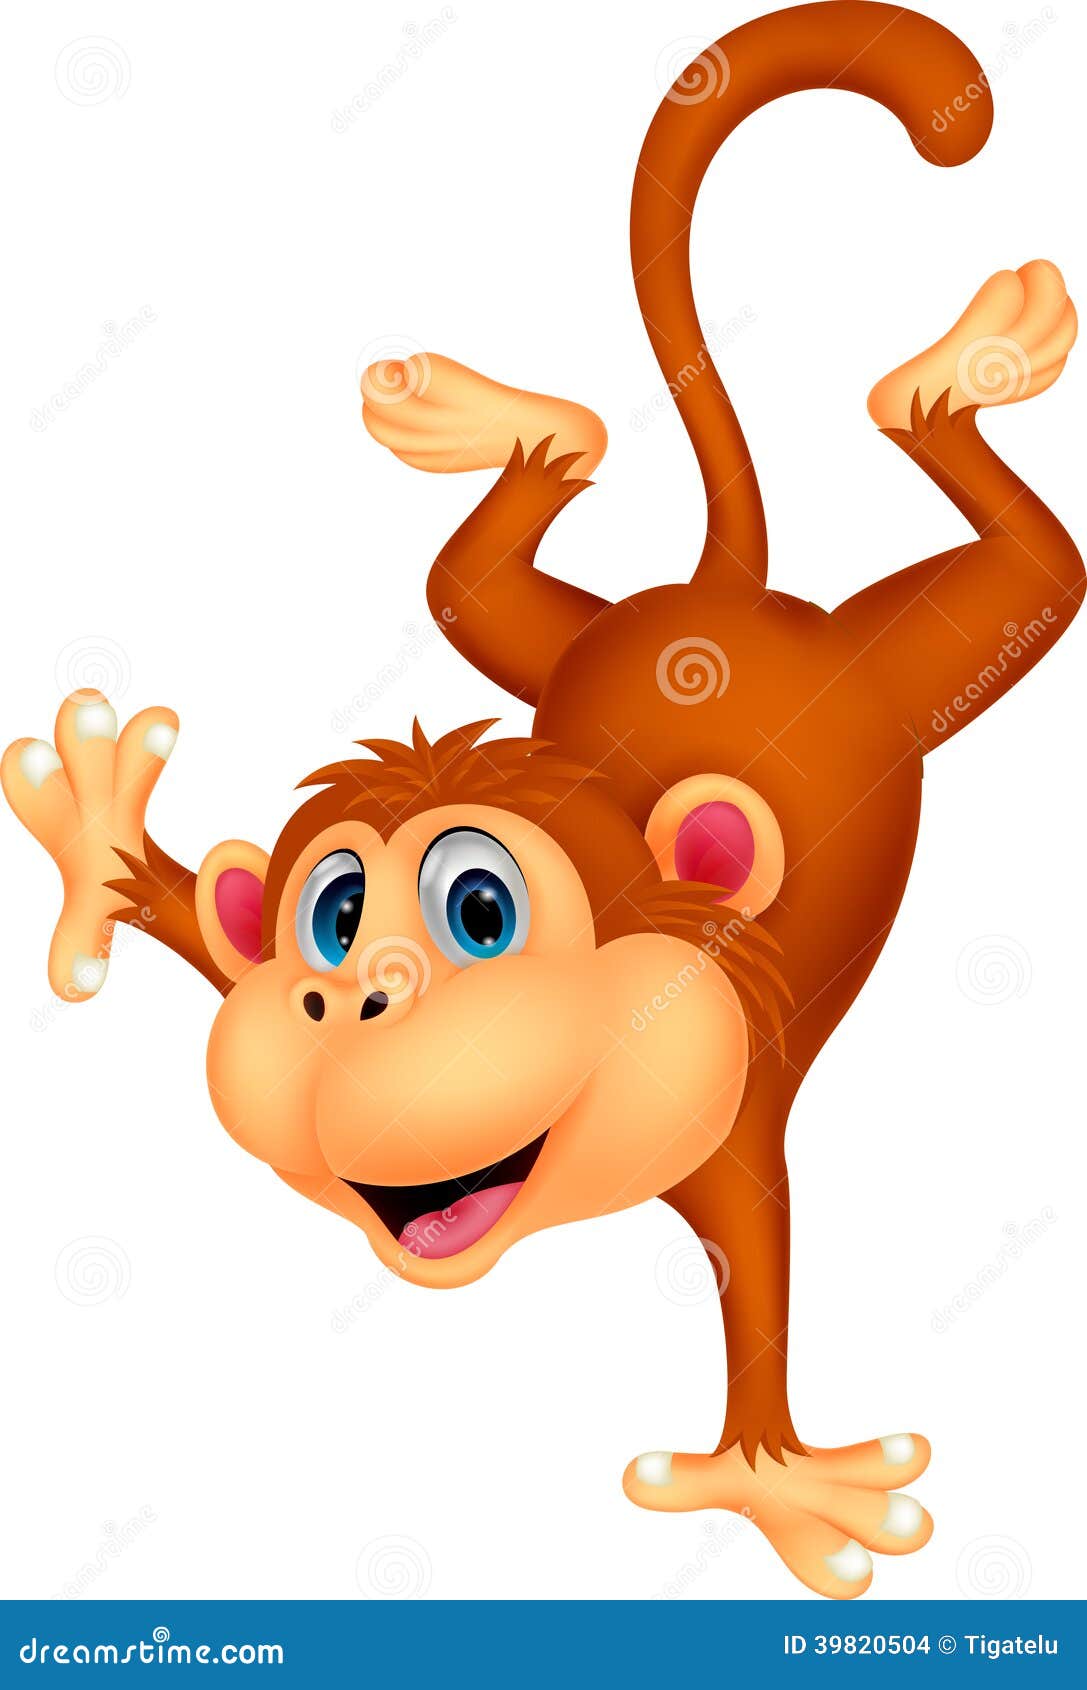 Cute Monkey Blinking Cartoon. Vector Drawing Icon Of Cute Monkey